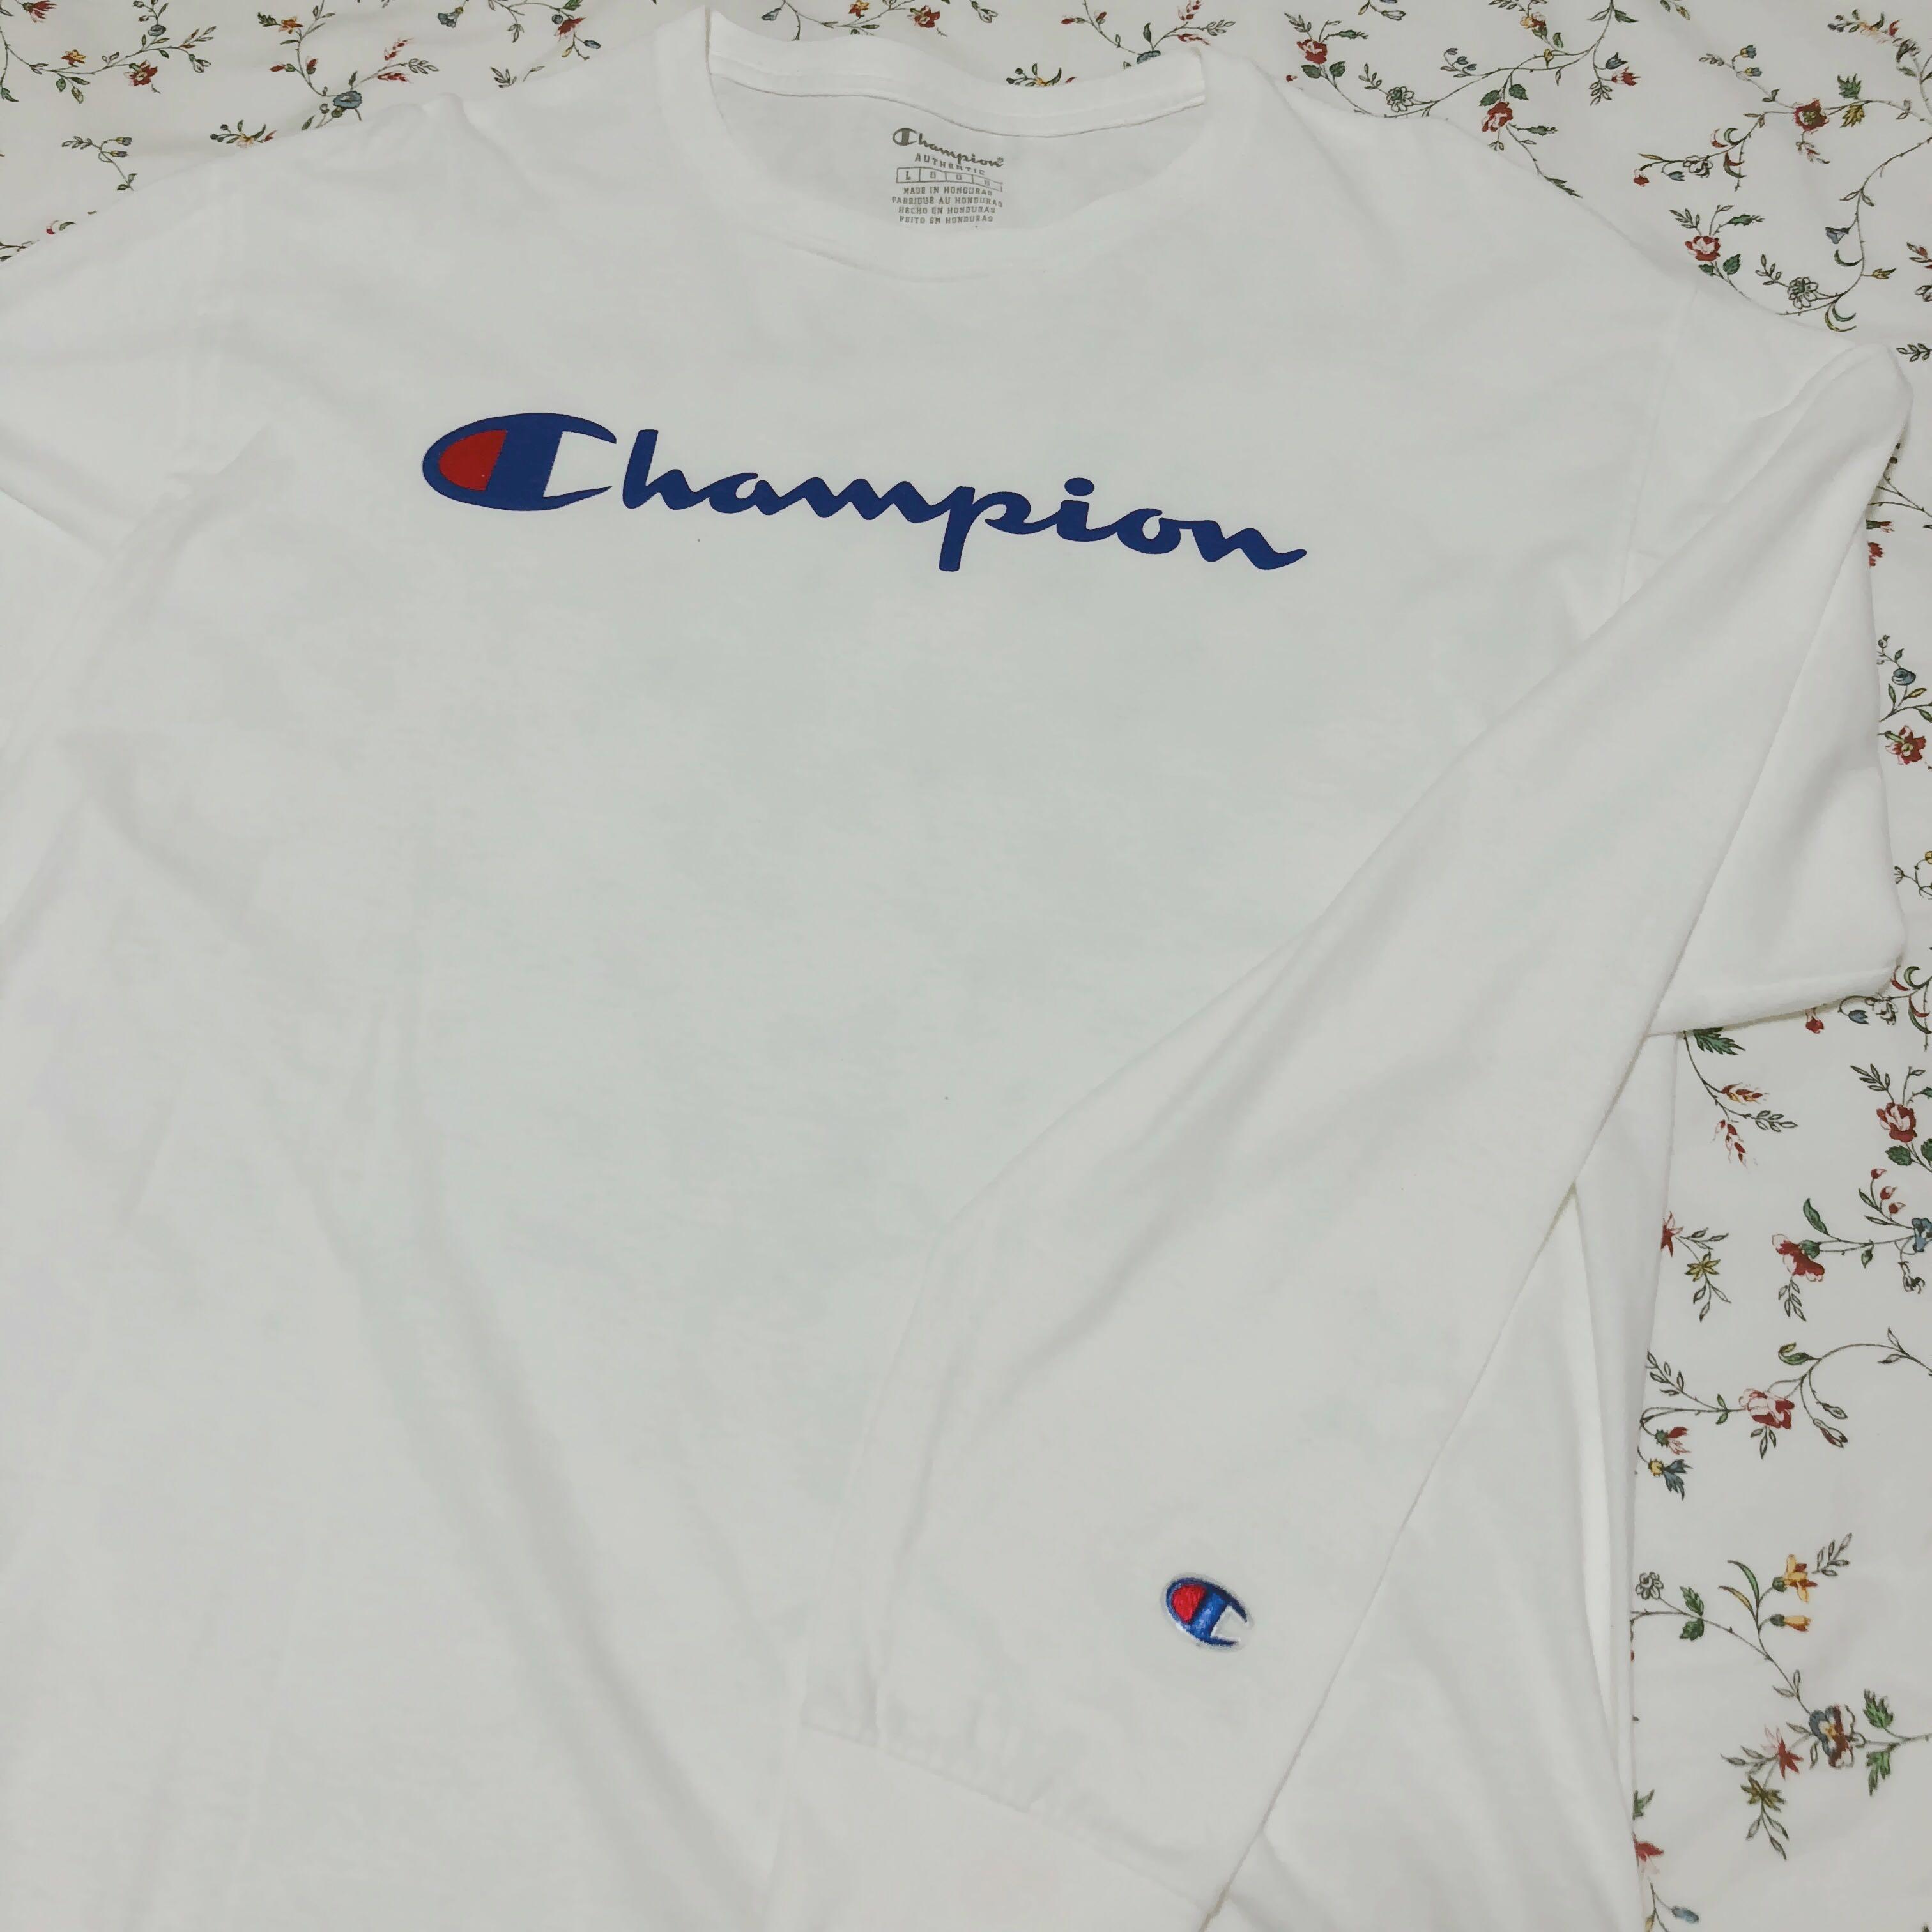 champion shirt mens sale